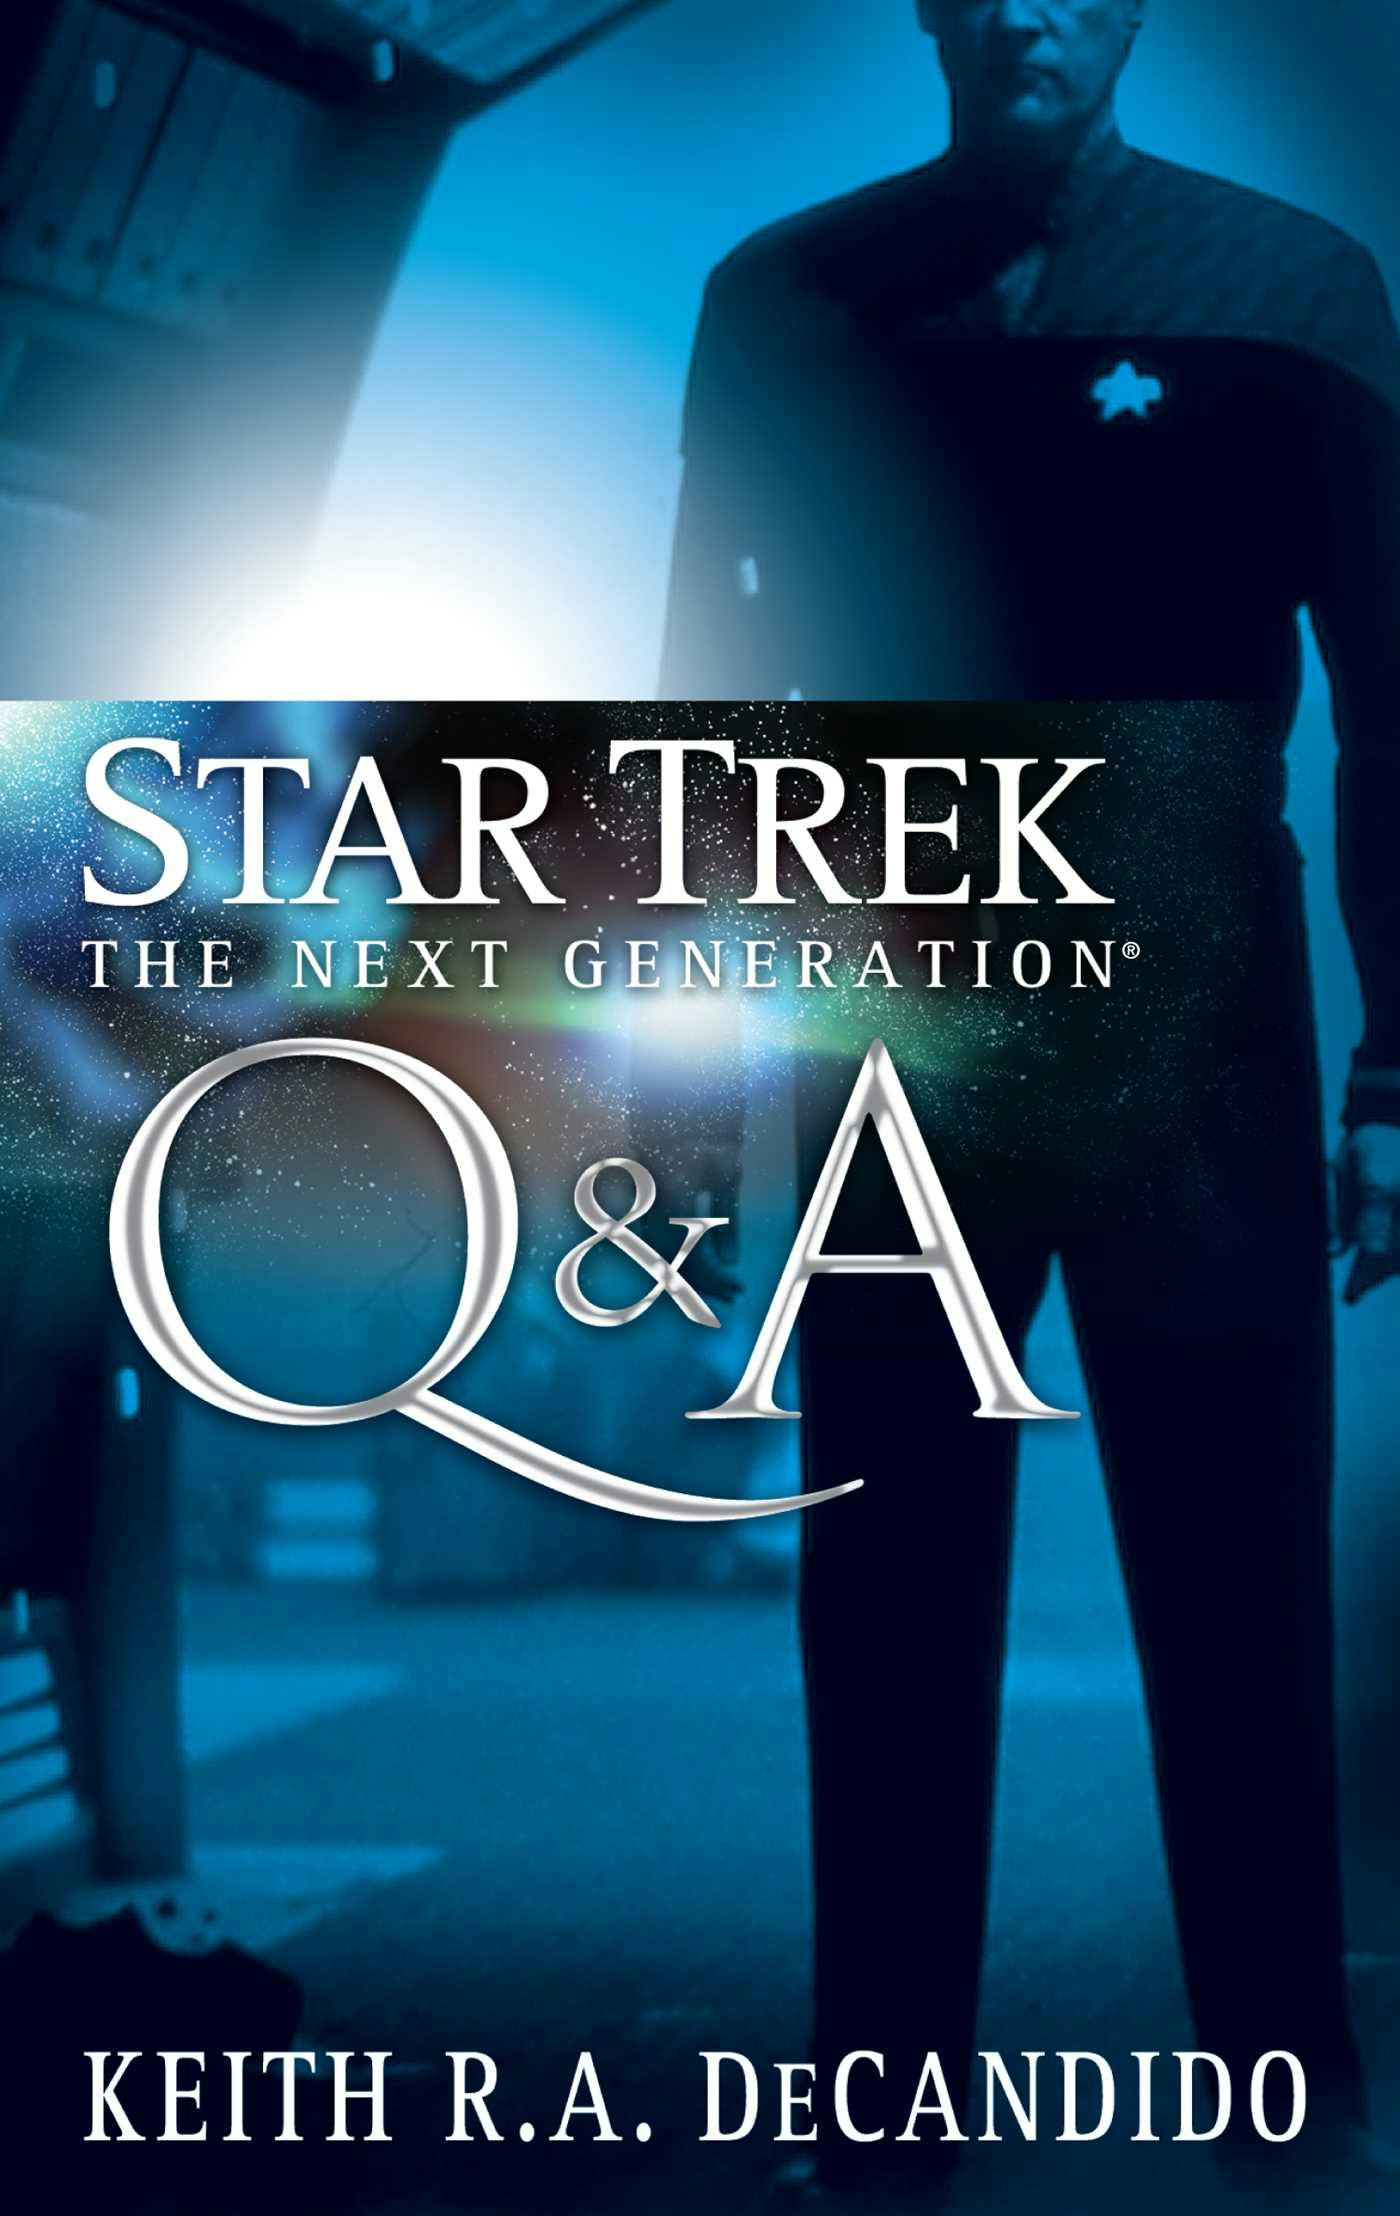 Star Trek: The Next Generation: Q&A - undefined